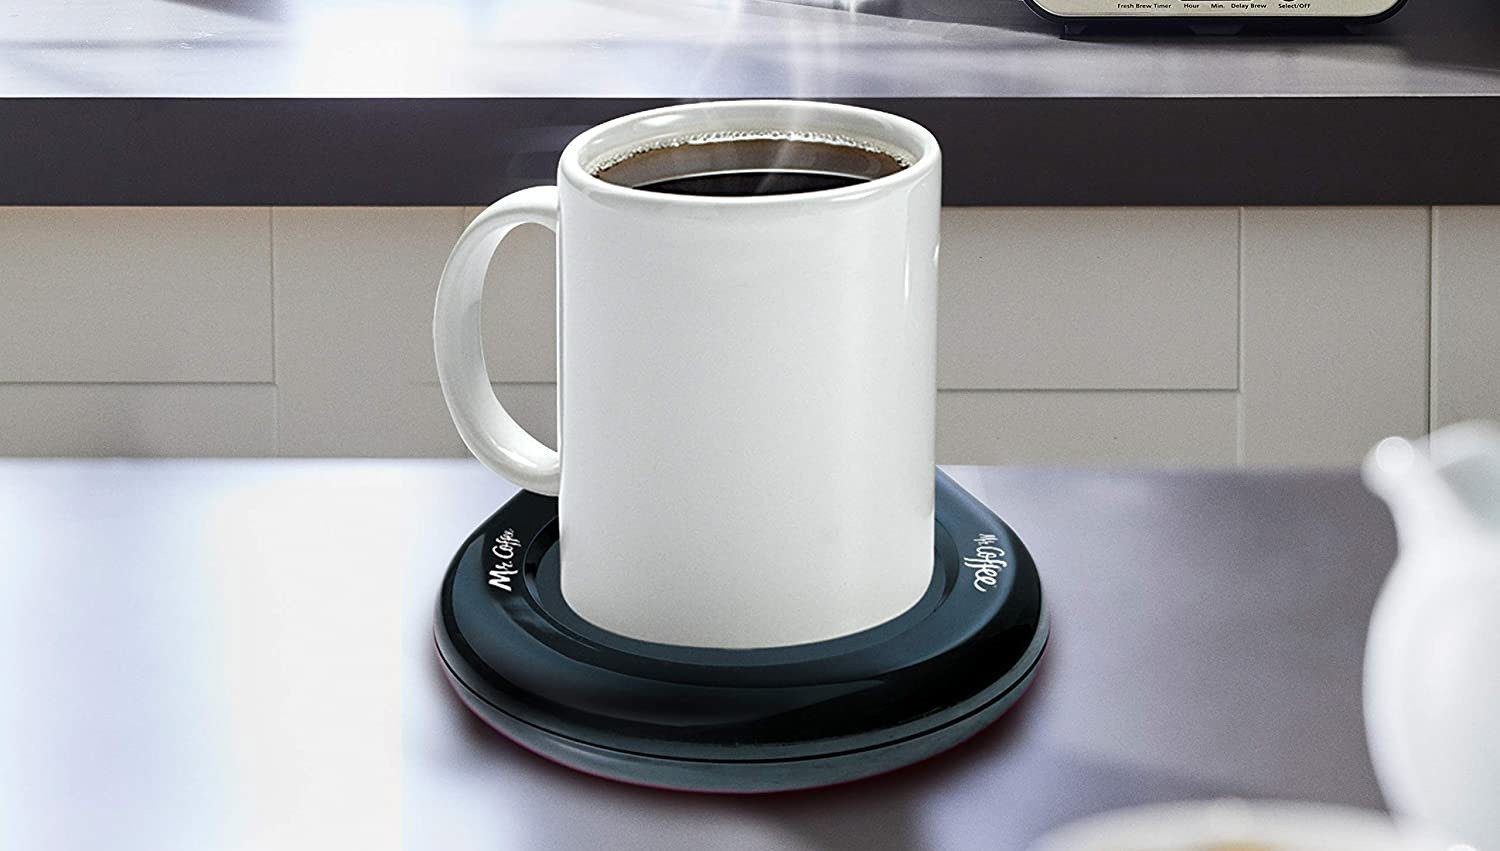 https://www.guidingtech.com/wp-content/uploads/Top-n-Coffee-Mug-Warmers-for-Your-Office-Desk-Mr.-Coffee_8dadce3c69543eb791cf840281e83aa9.jpg